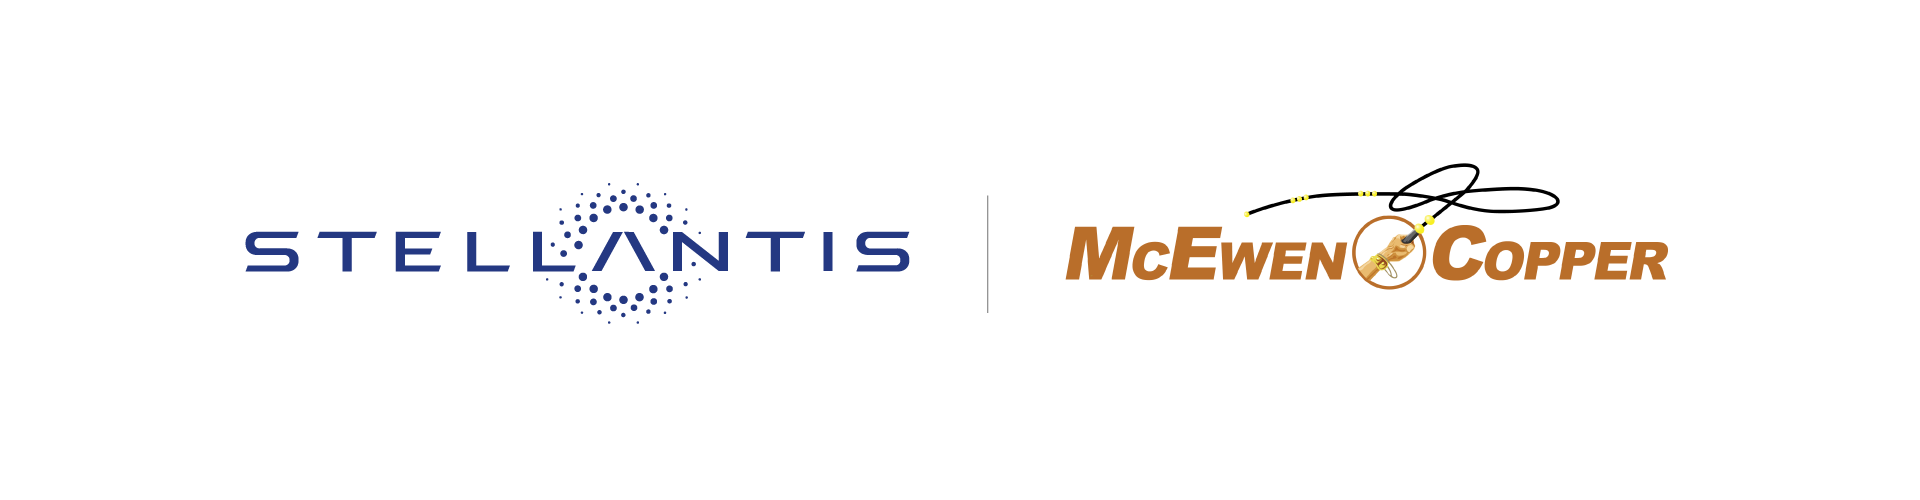 Image of Stellantis Mcewen Copper logo